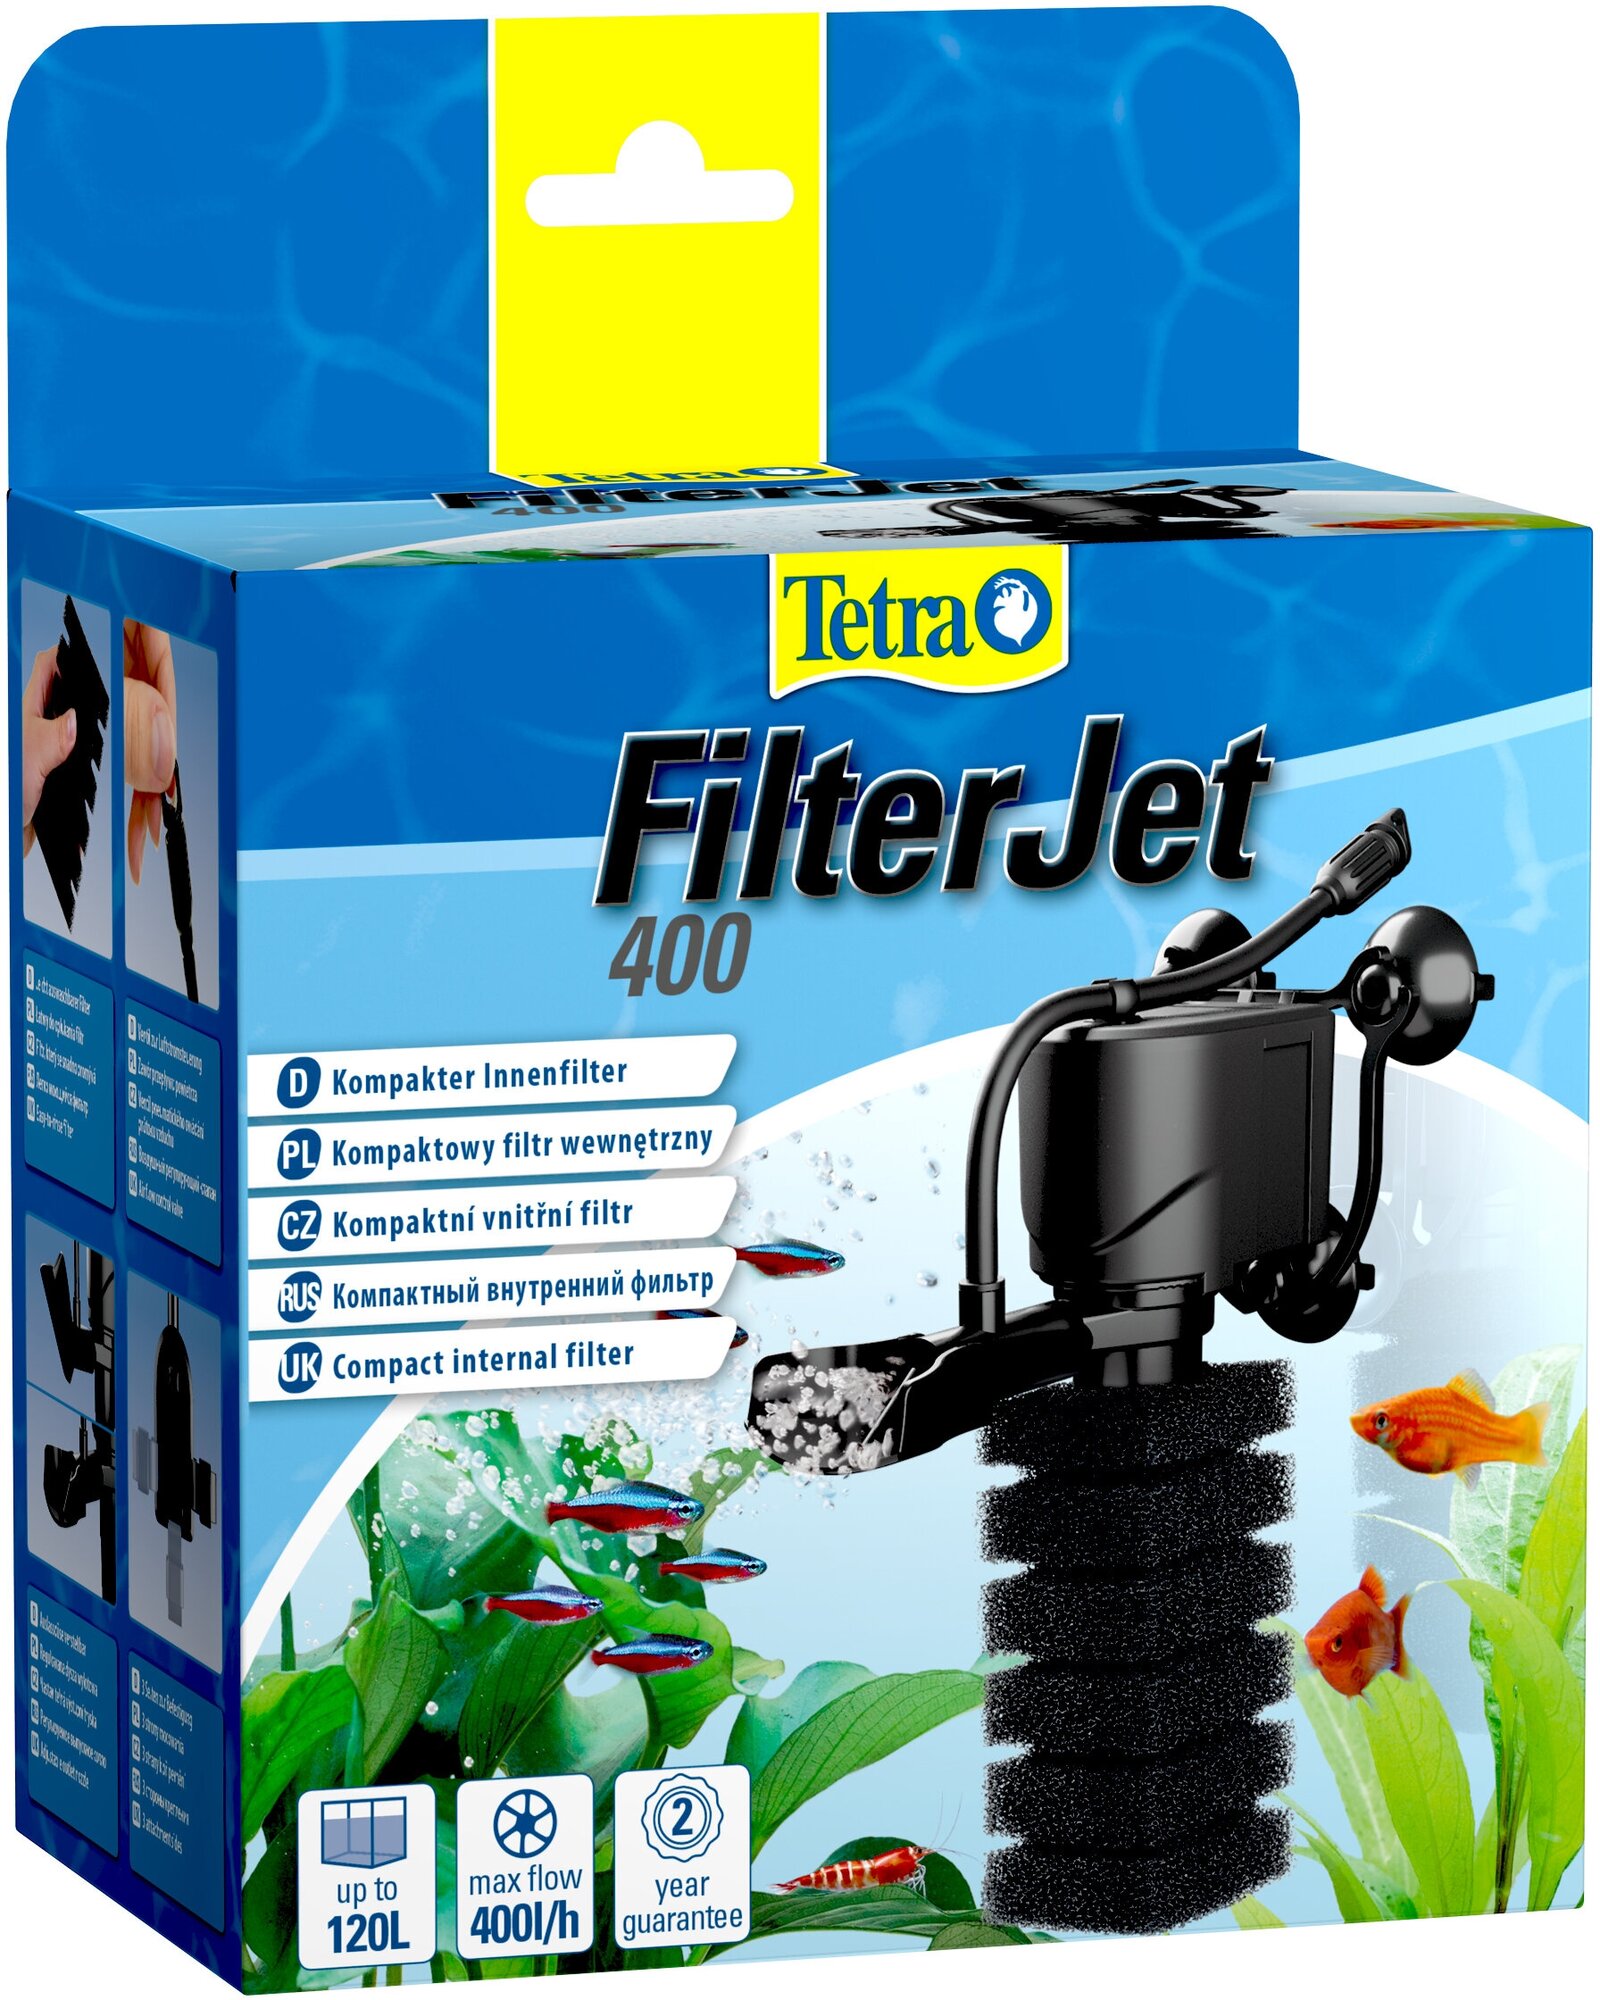 Внутренний фильтр Tetra FilterJet 400 для аквариумов 50-120 л